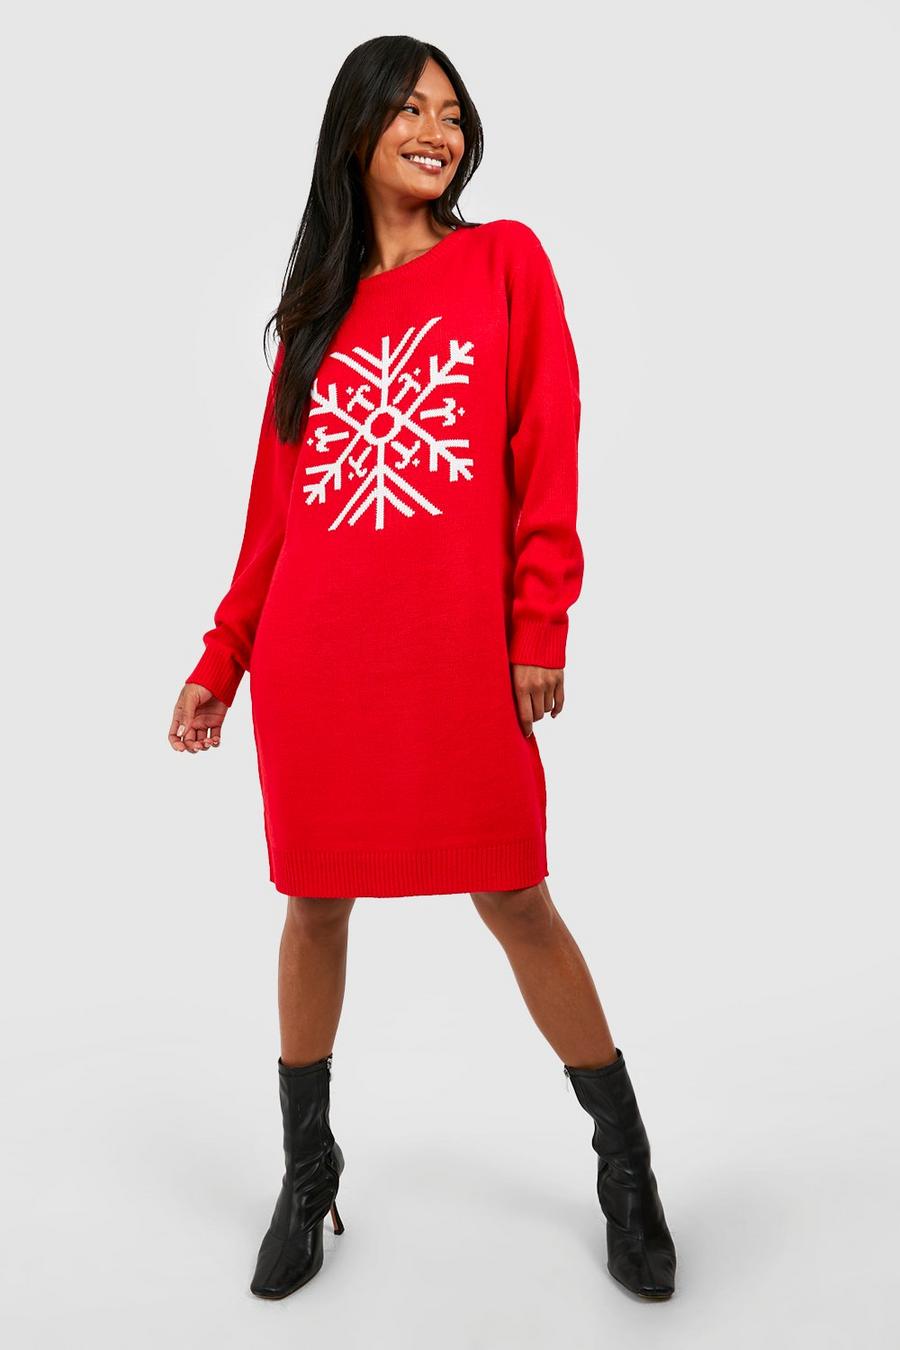 Red röd Snowflake Chirstmas Jumper Dress